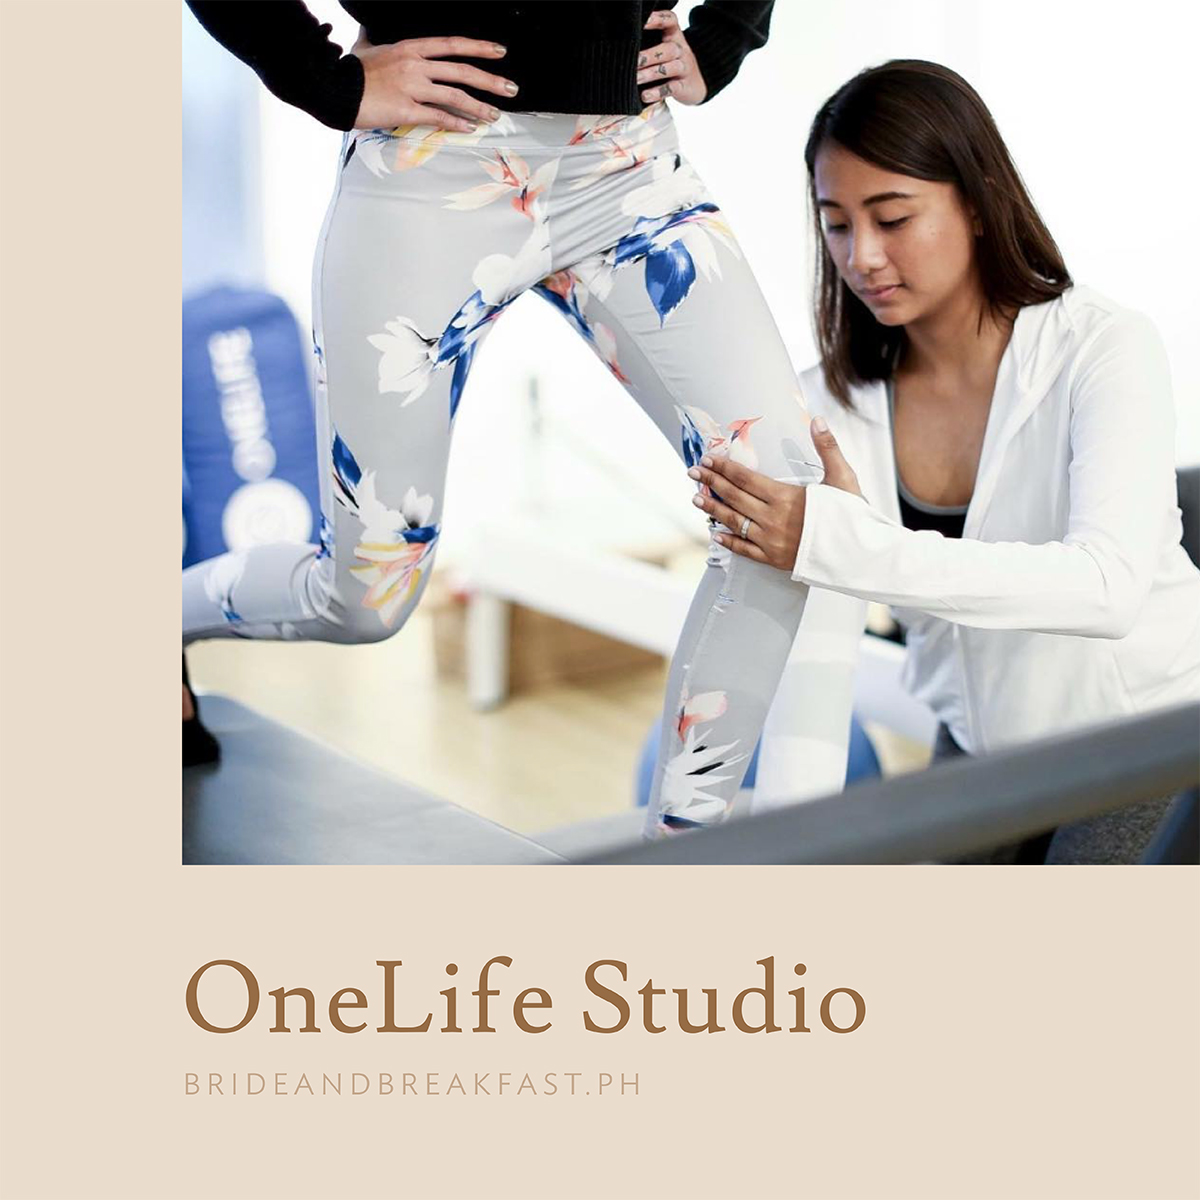 OneLife Studio